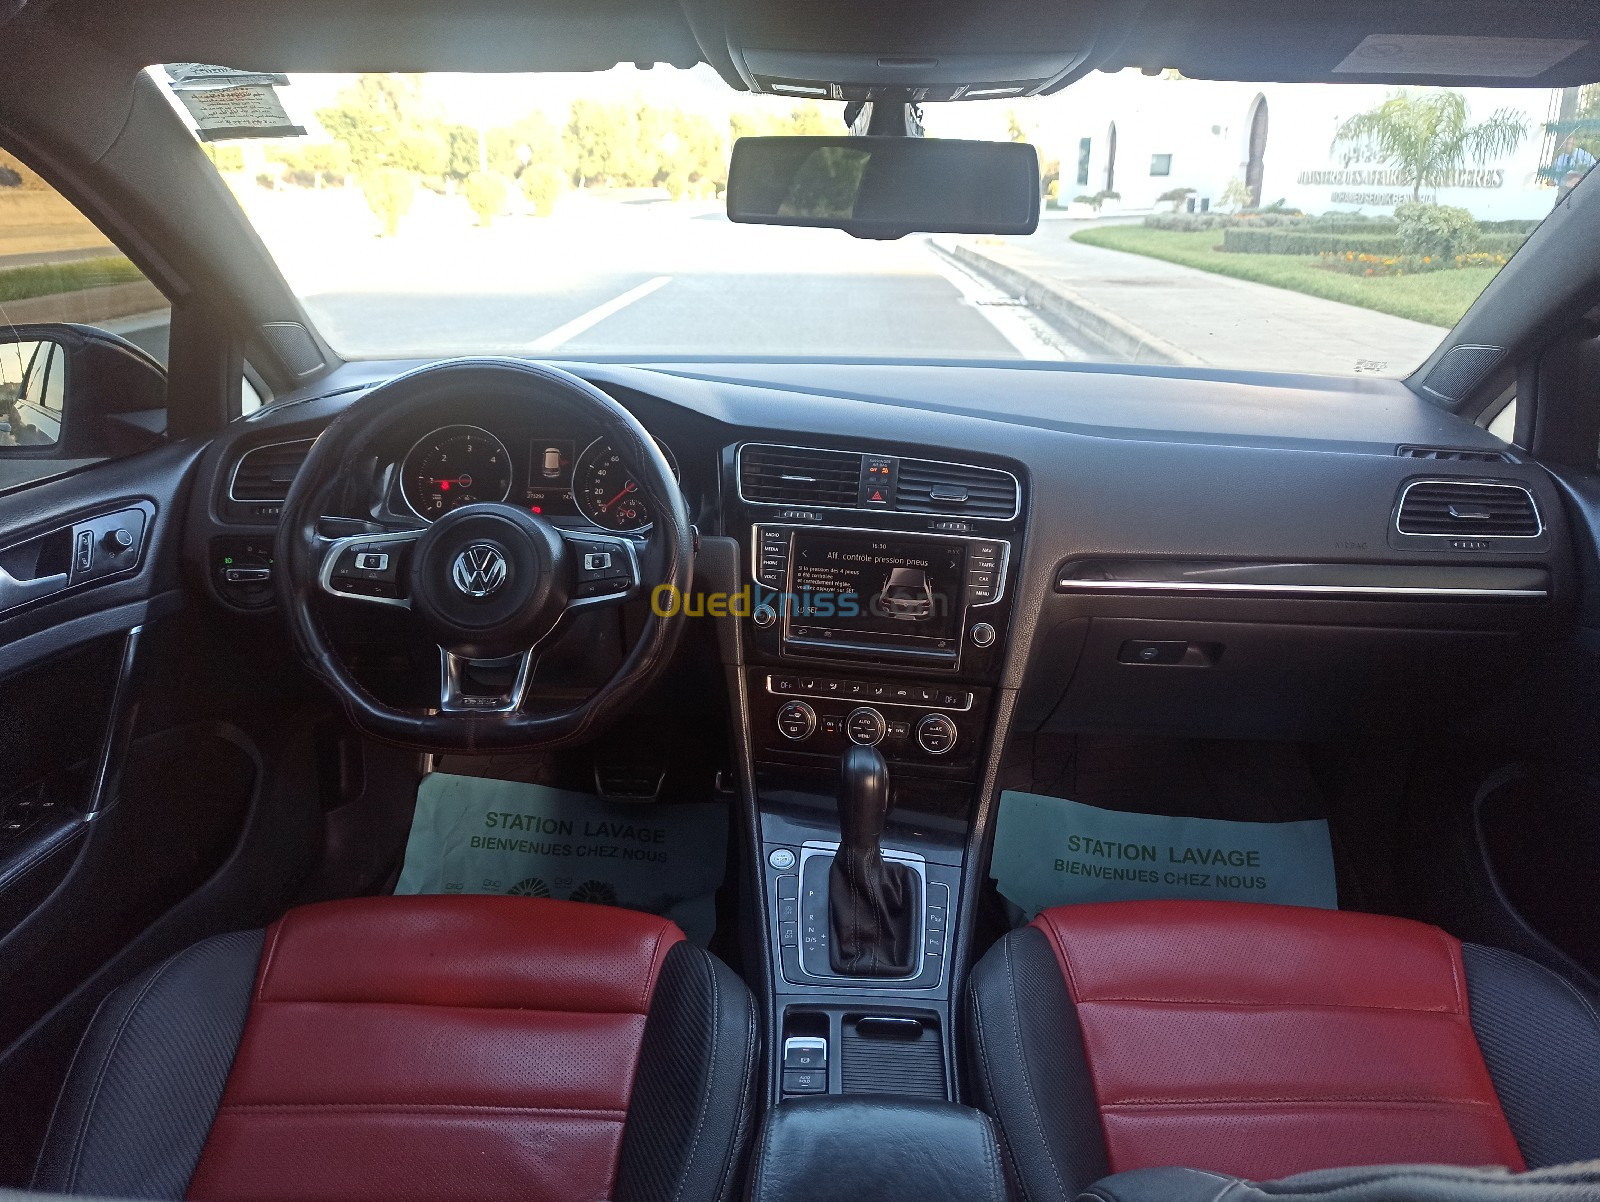 Volkswagen Golf 7 2015 GTD